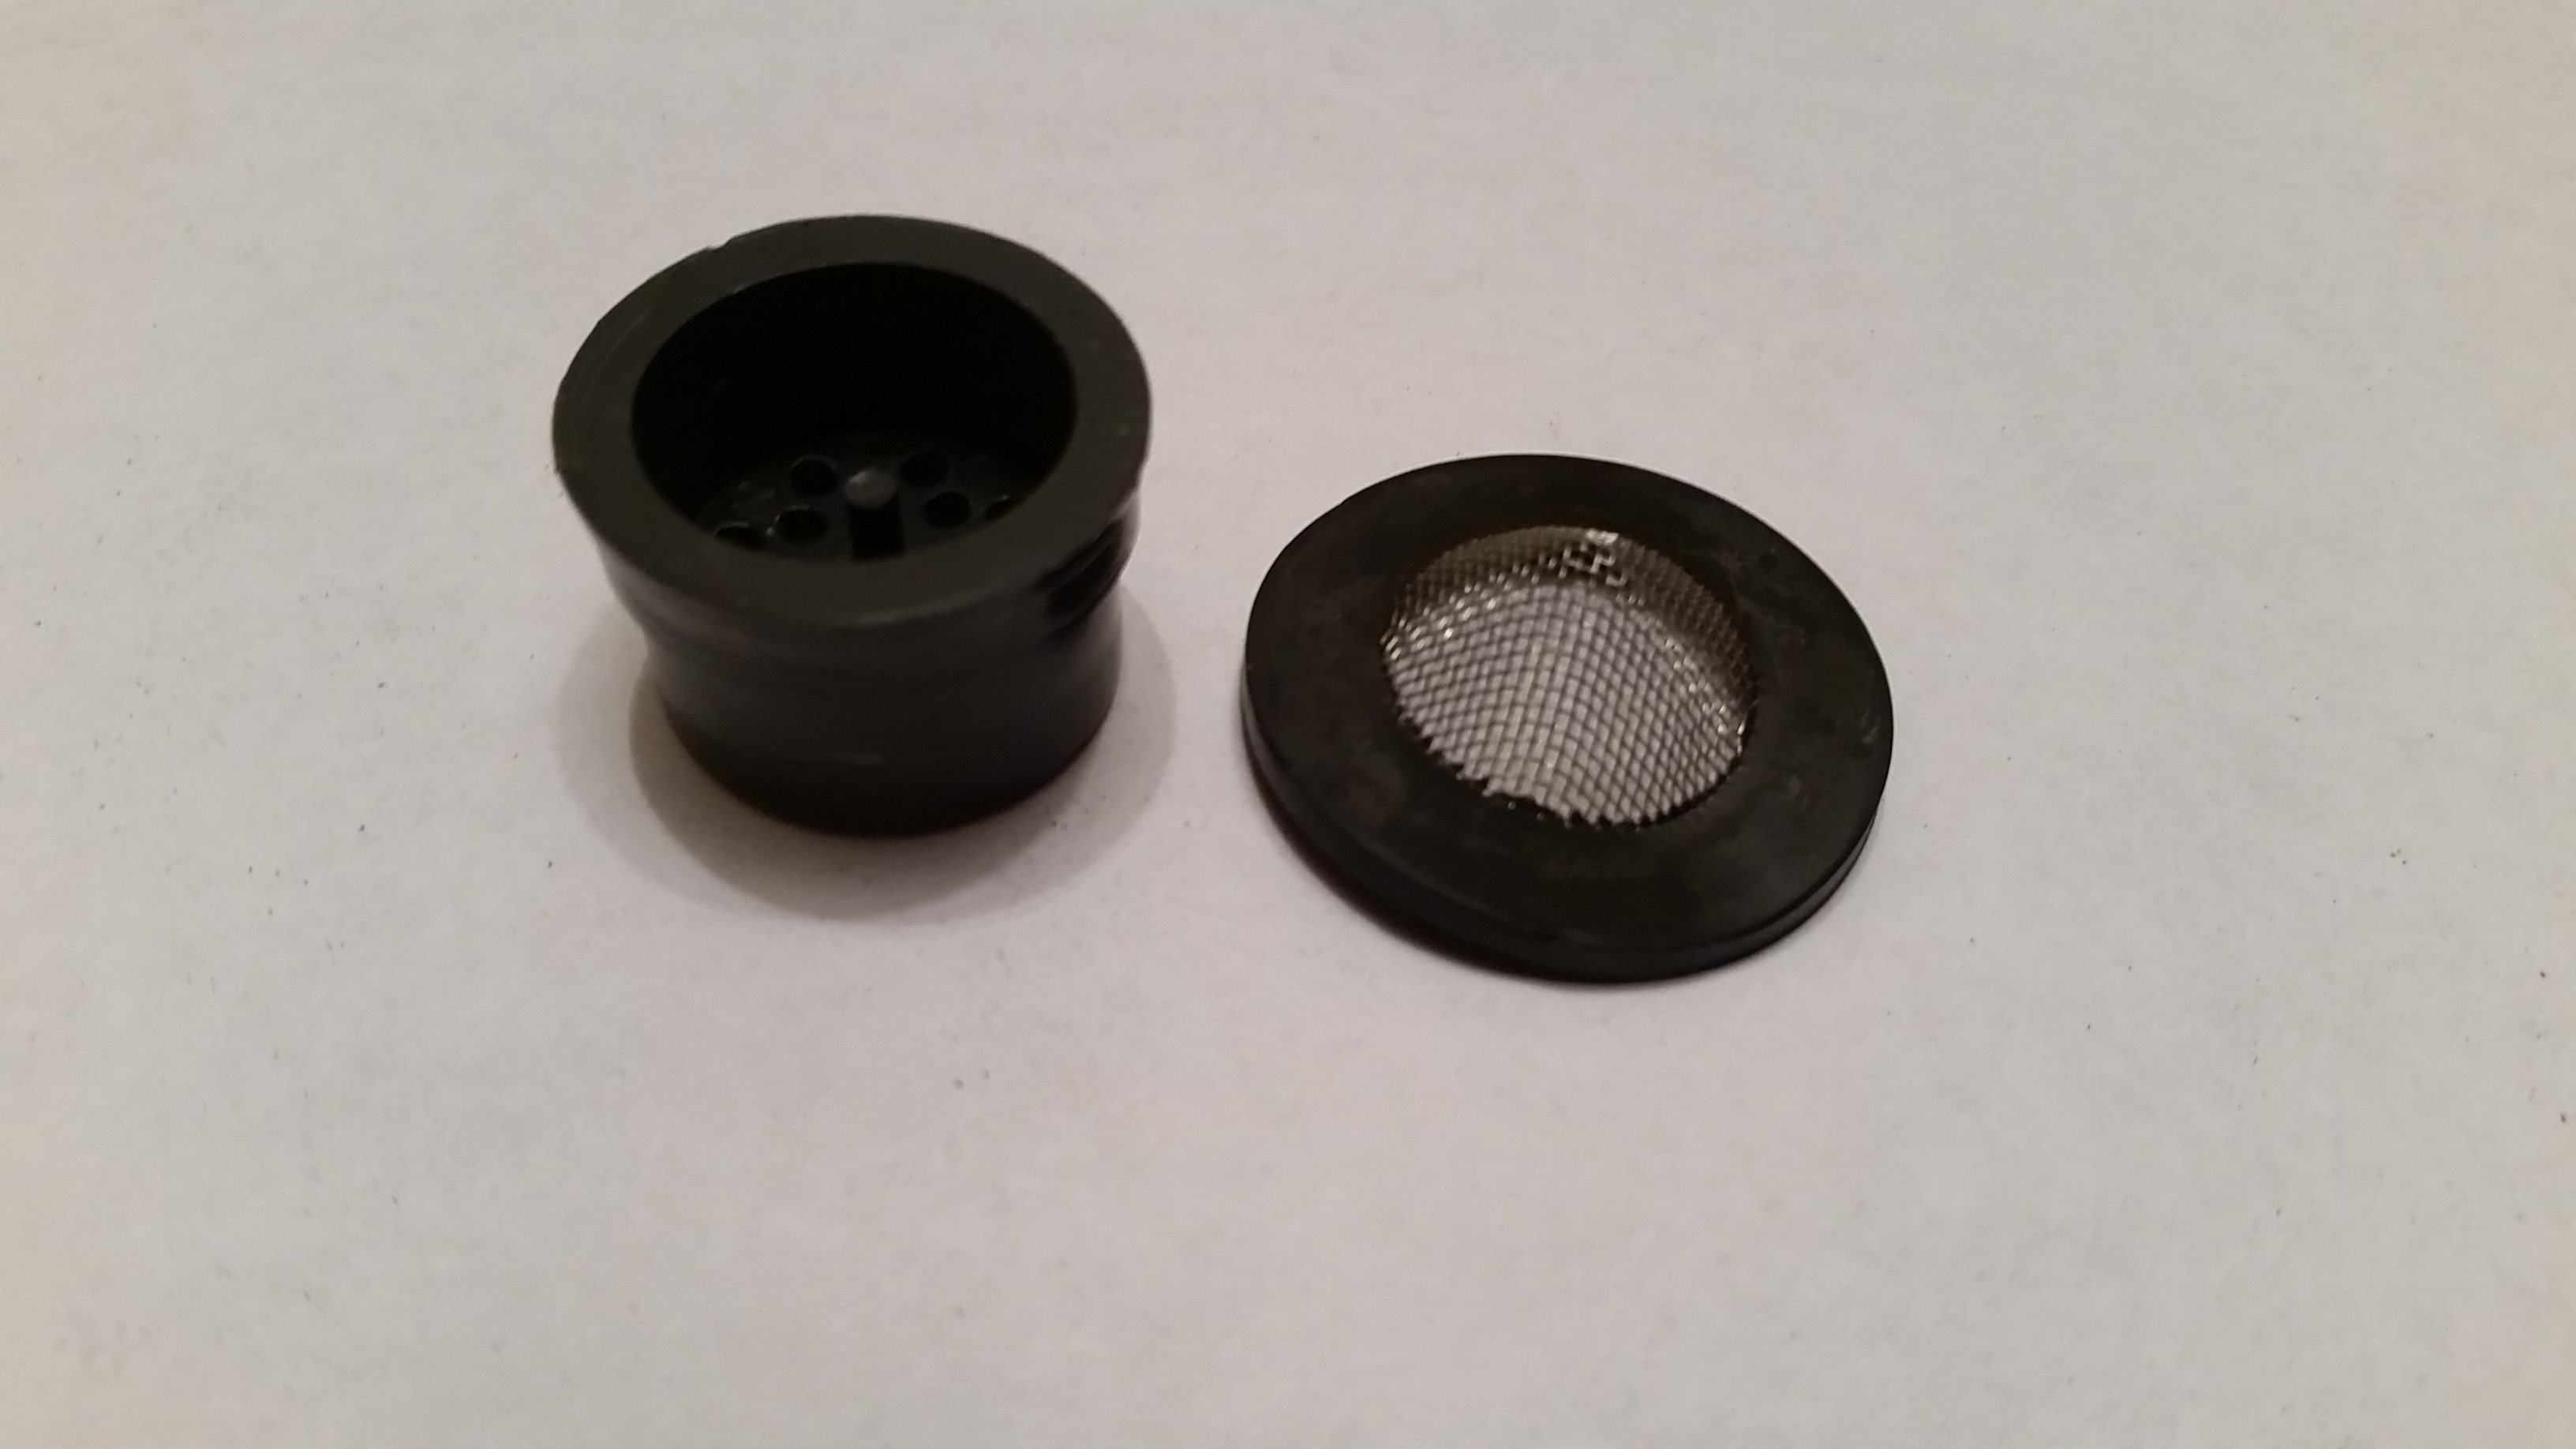 Filter Set - Inside Handle Mesh Filter and head Capsule